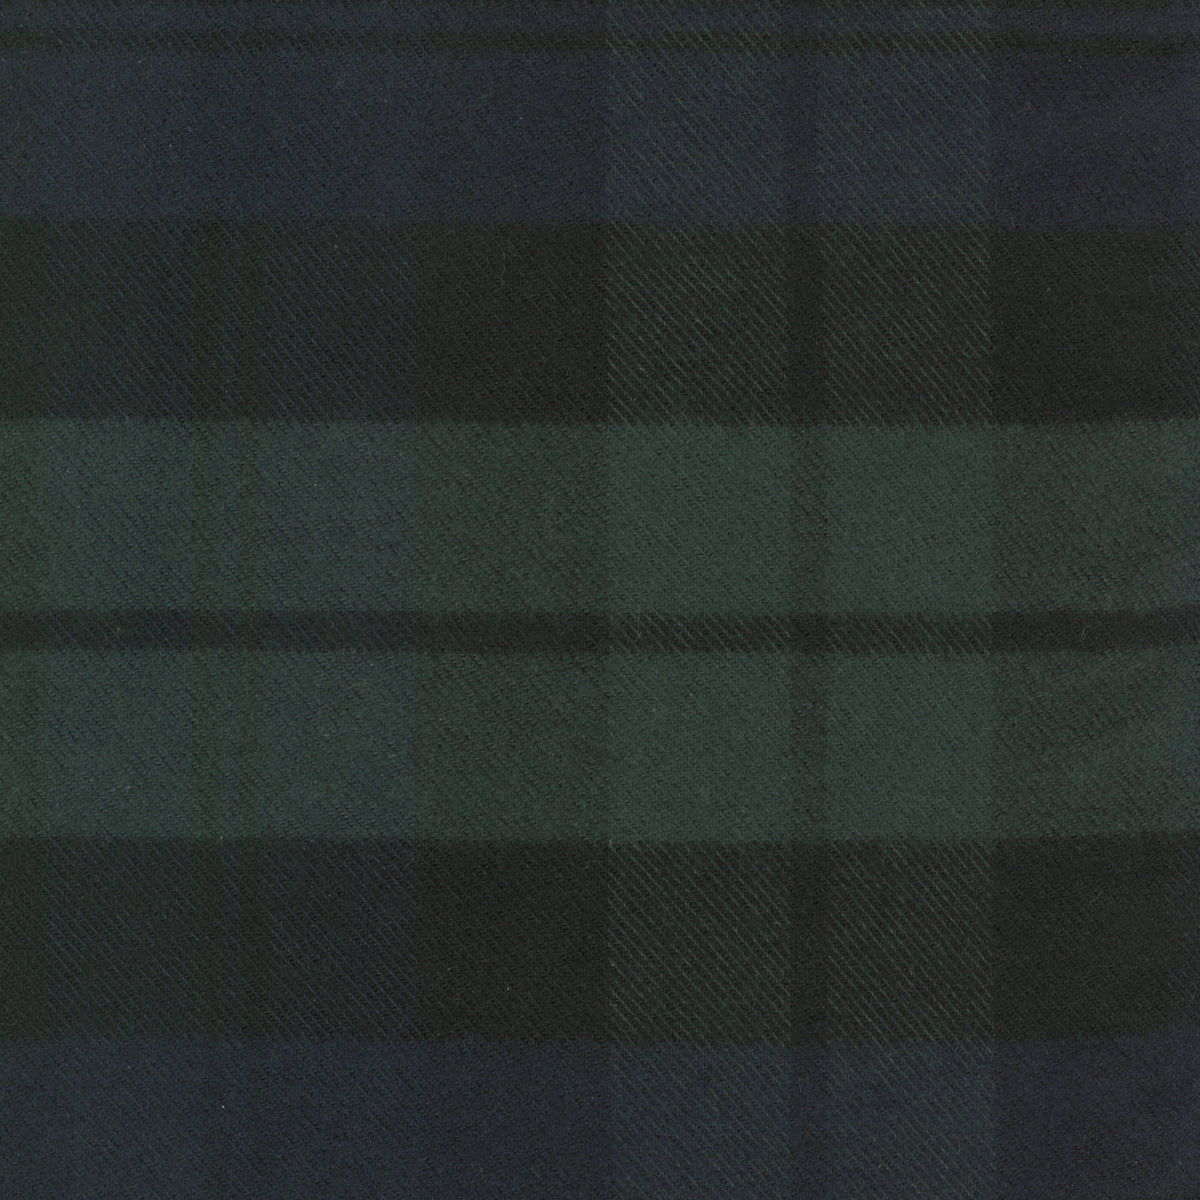 Made-to-Measure Shirt in Blackwatch Tartan Flannel